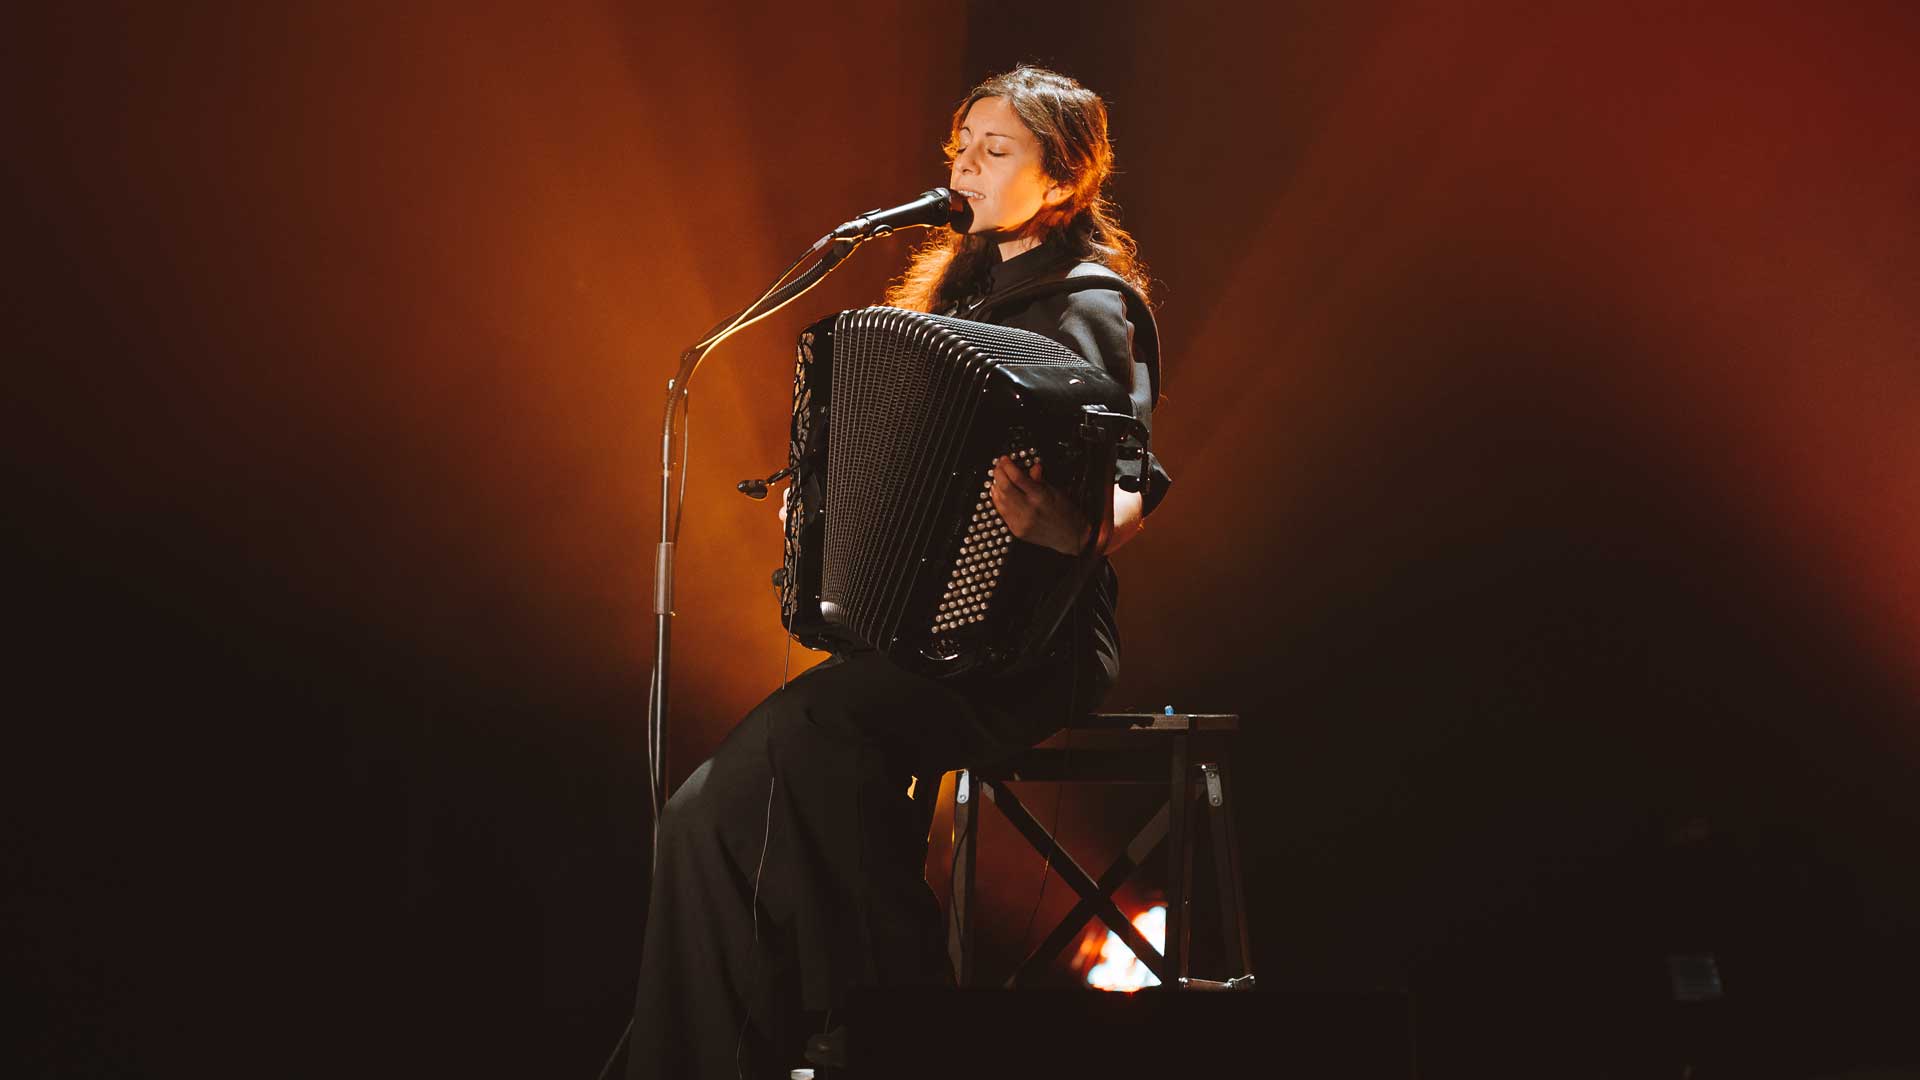 Louise O’sman en concert aux Oreilles en pointe - novembre 2022